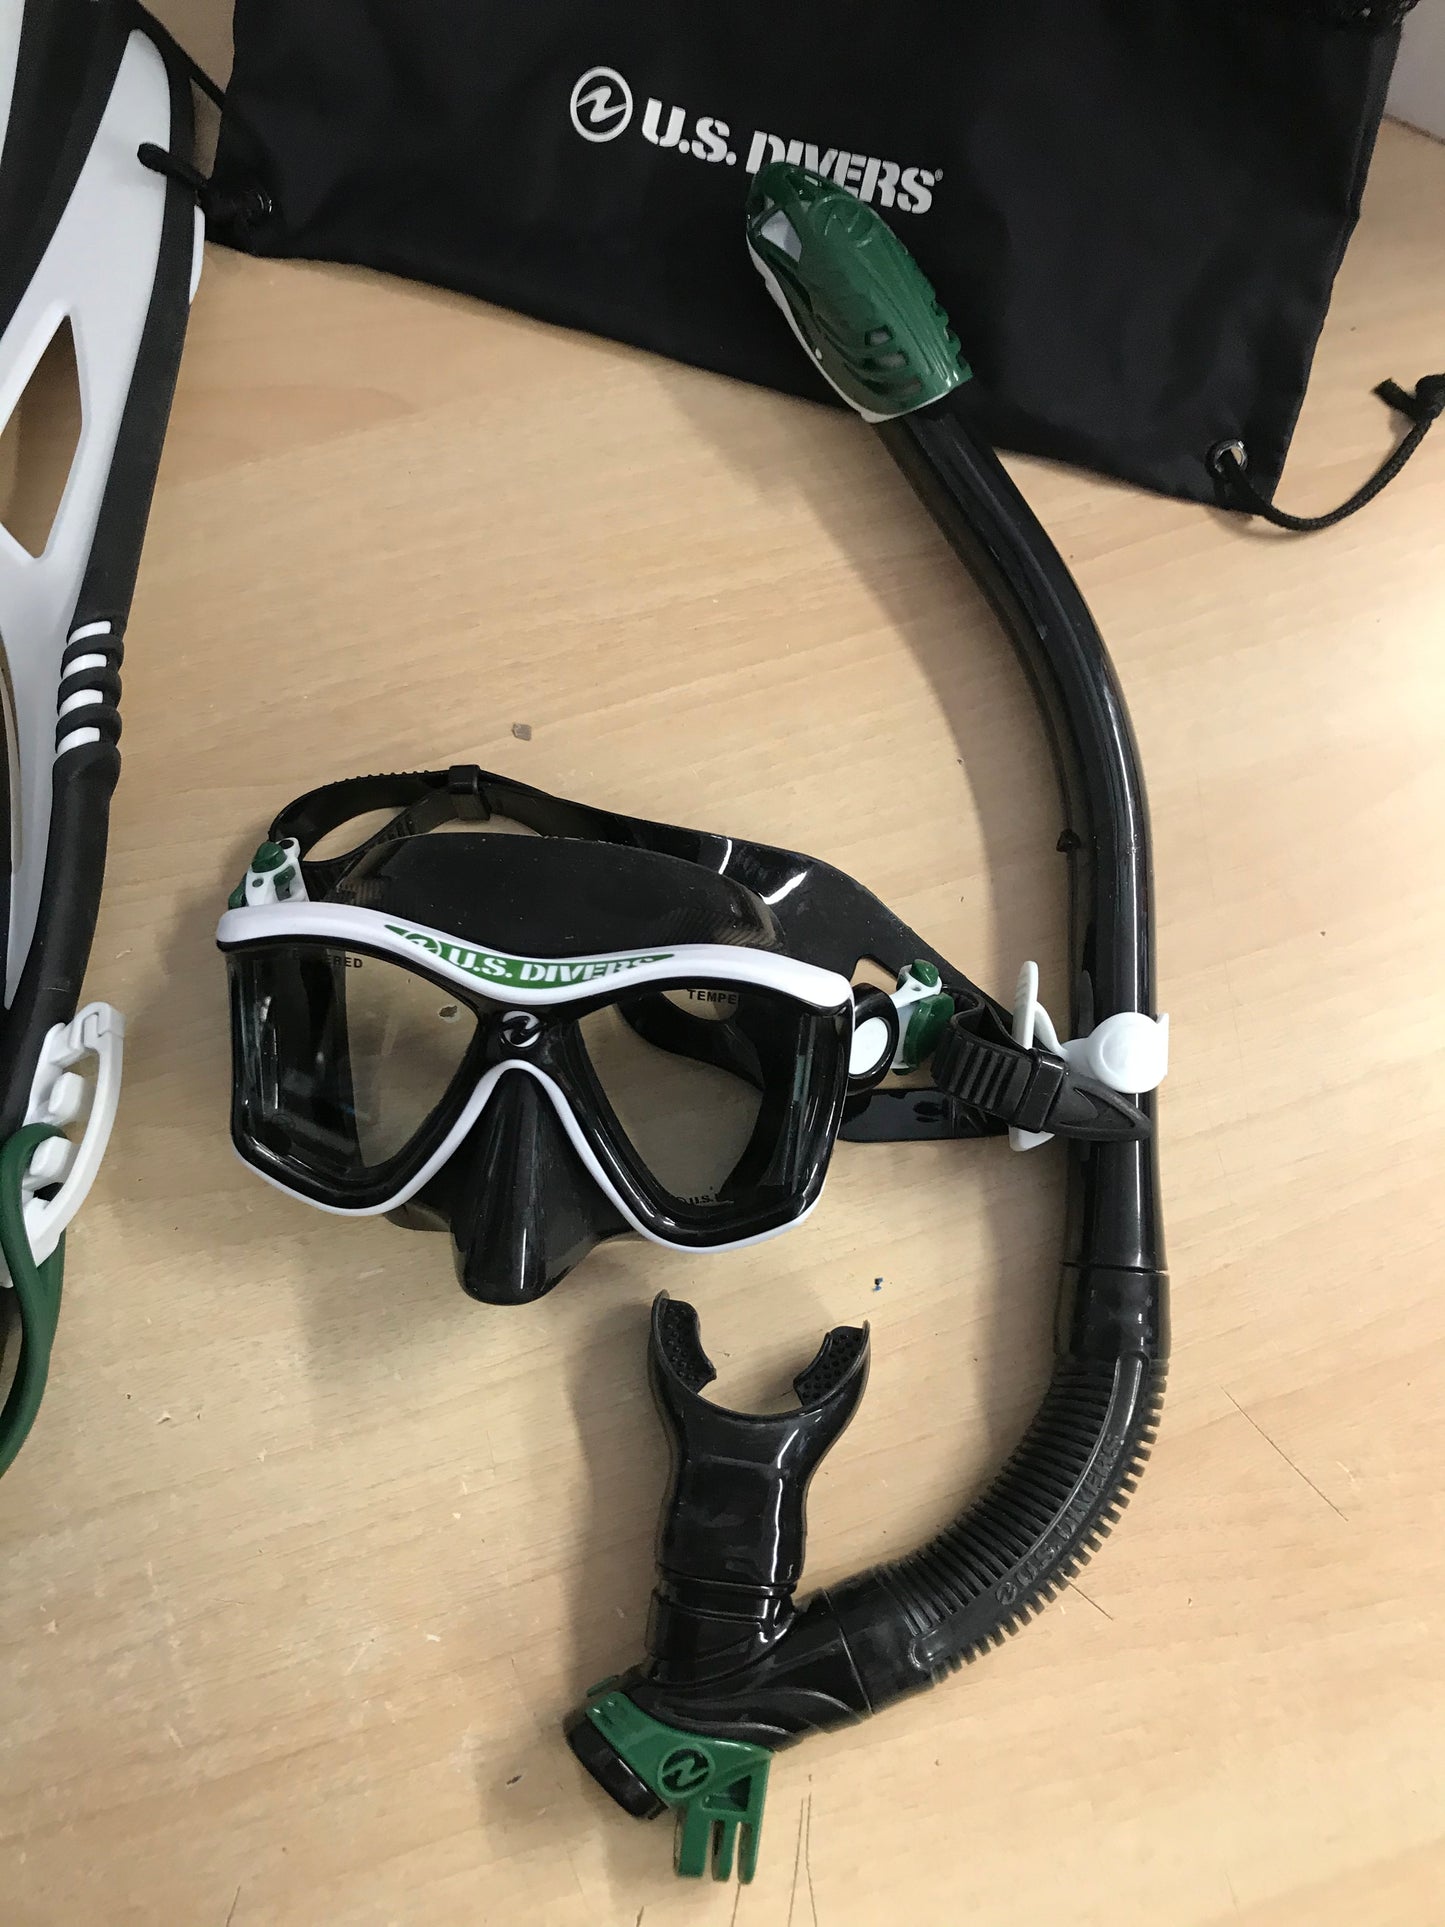 Snorkel Dive Fins Men's Shoe Size 9-13 U.S. Divers Hunter Green White Black New Demo Model